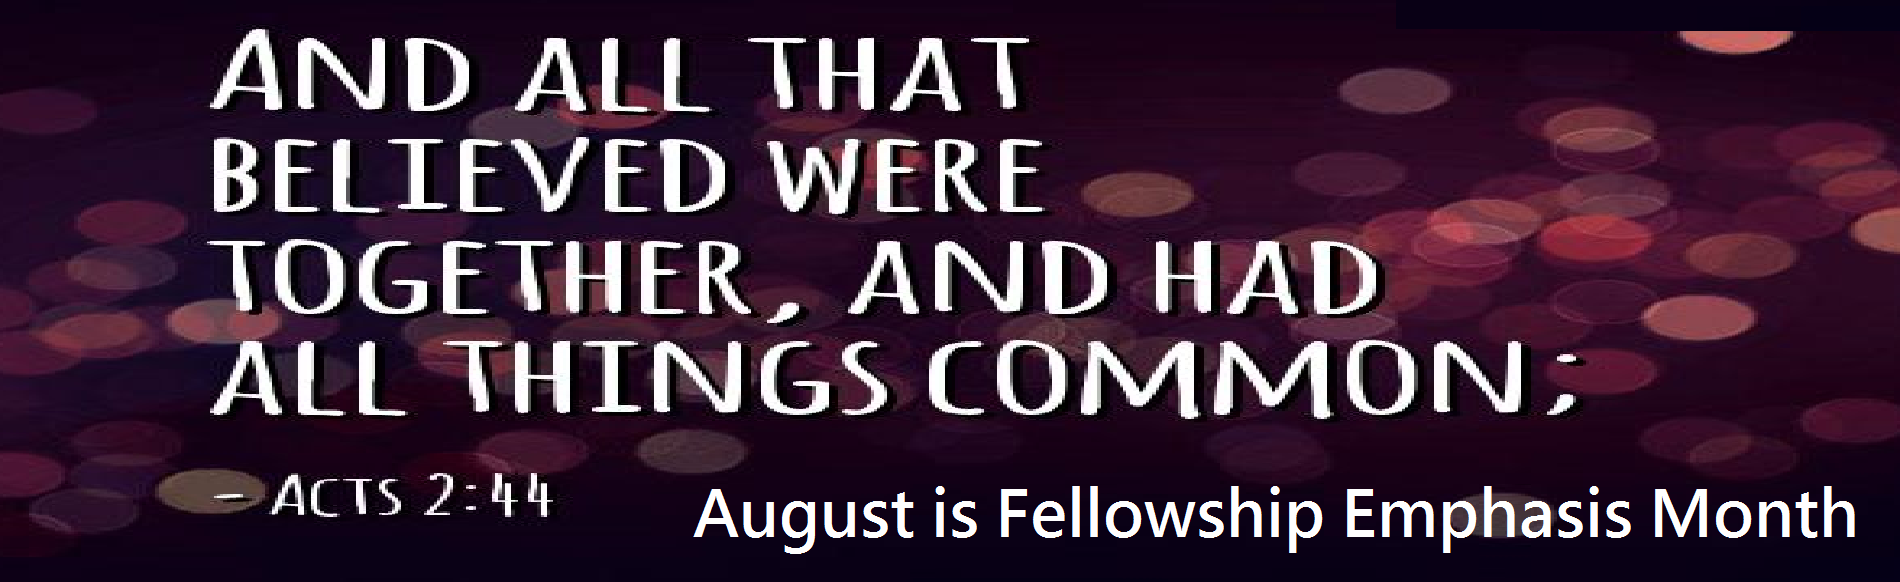 Fellowship Emphasis Month